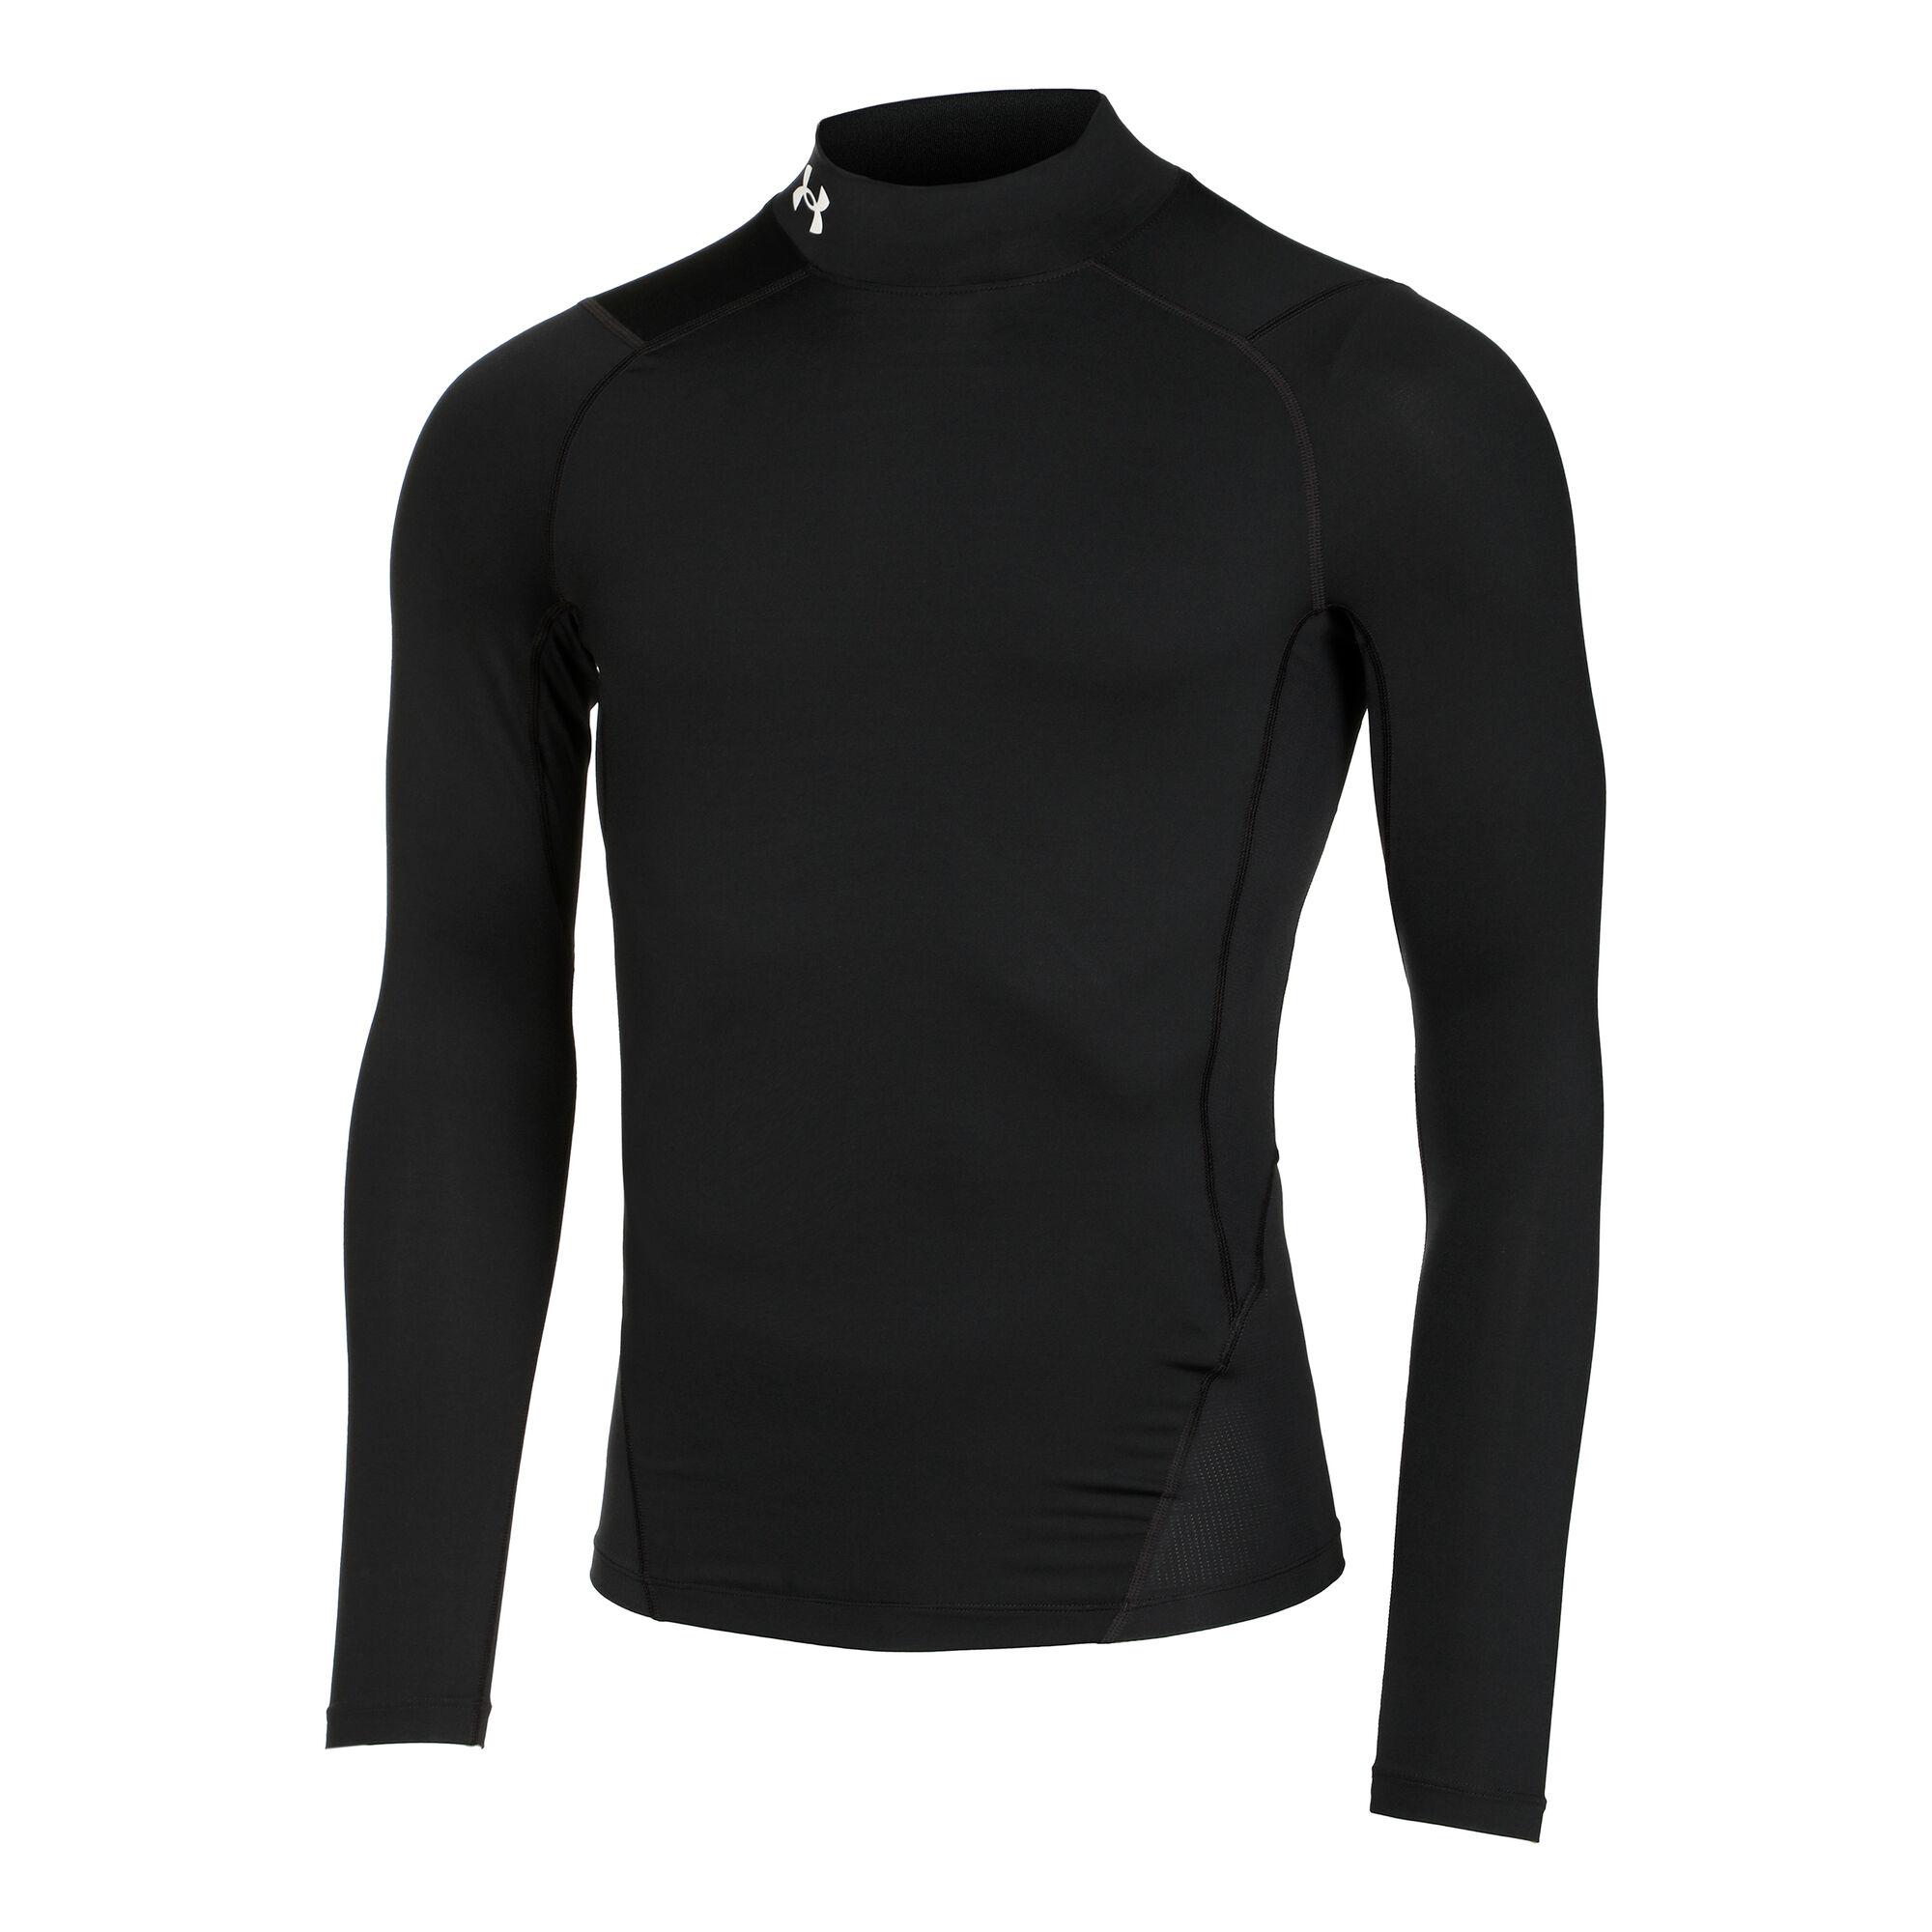 Under Armour Men's Black HeatGear Long-Sleeve Compression Shirt